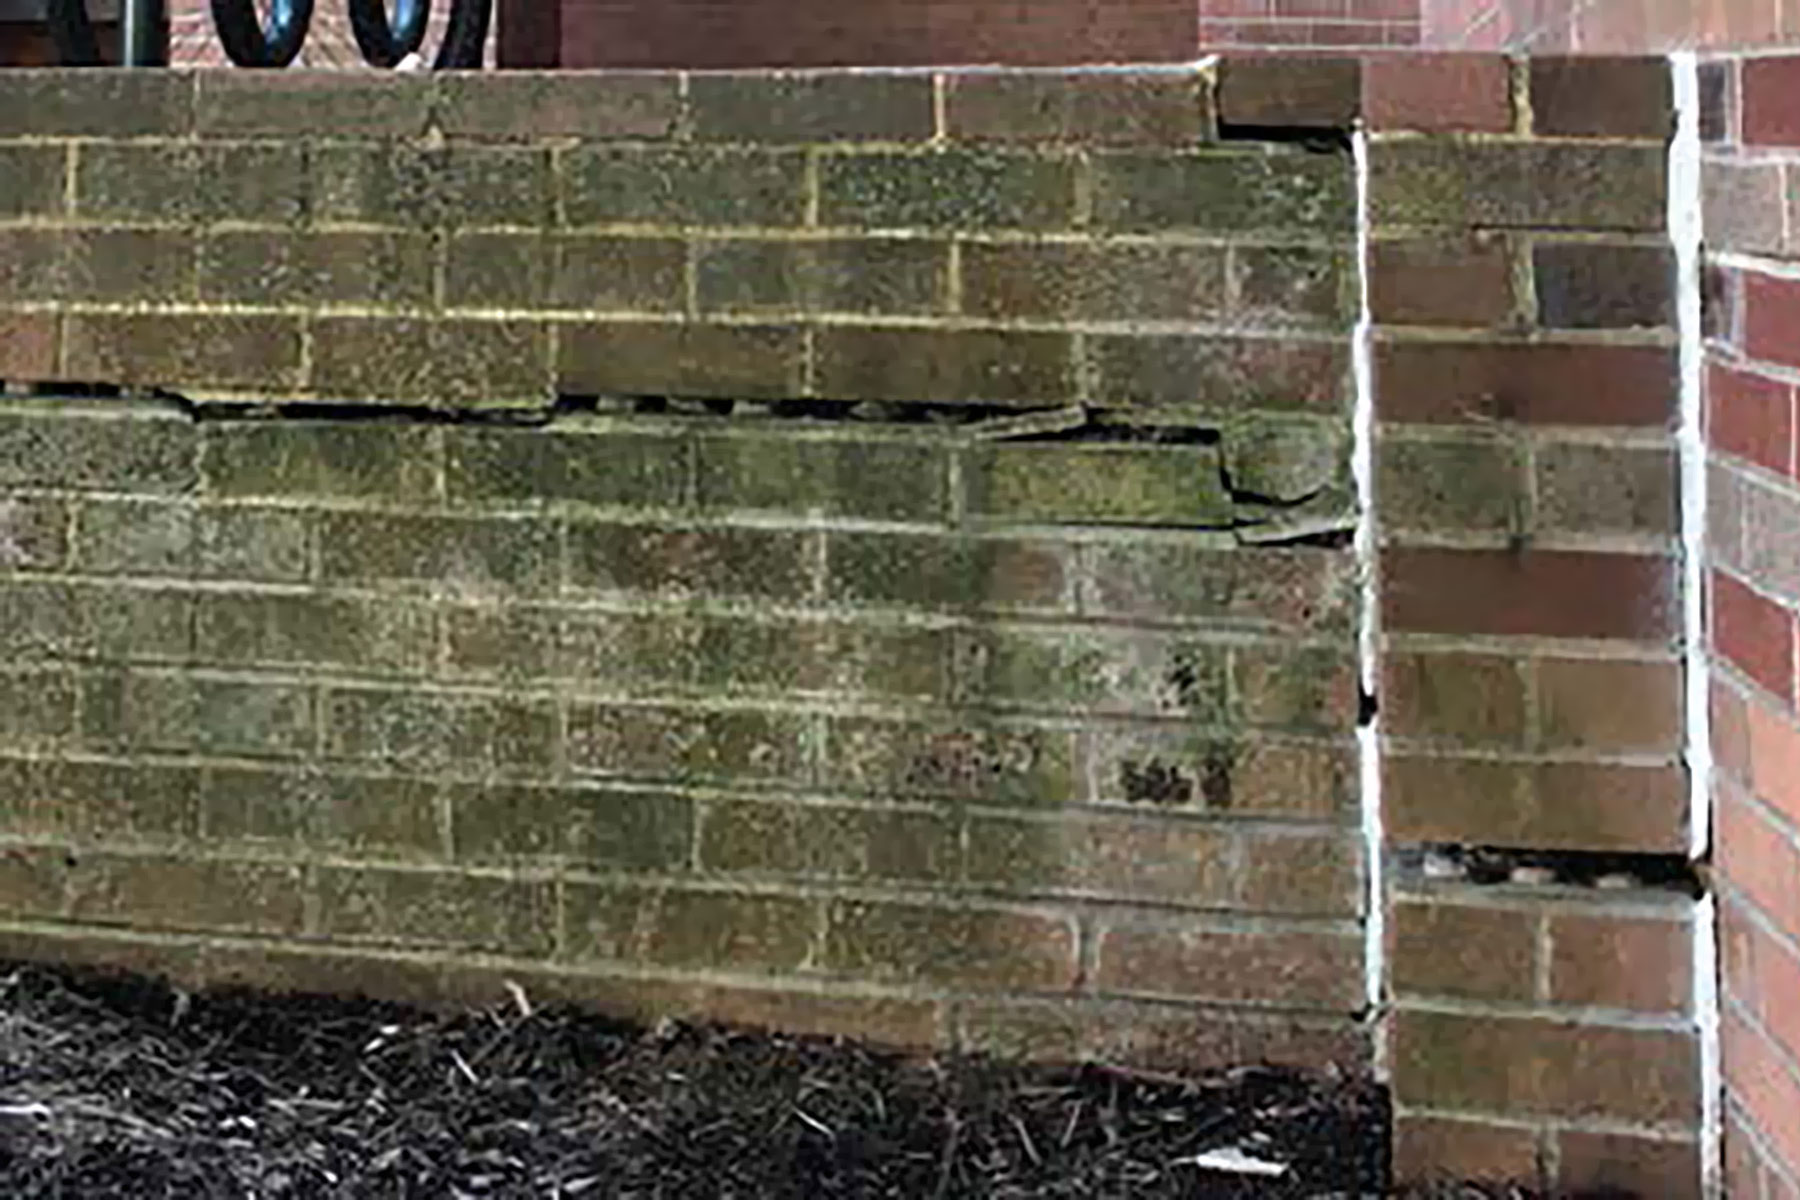 Cracked exterior brick at Peacock Hall